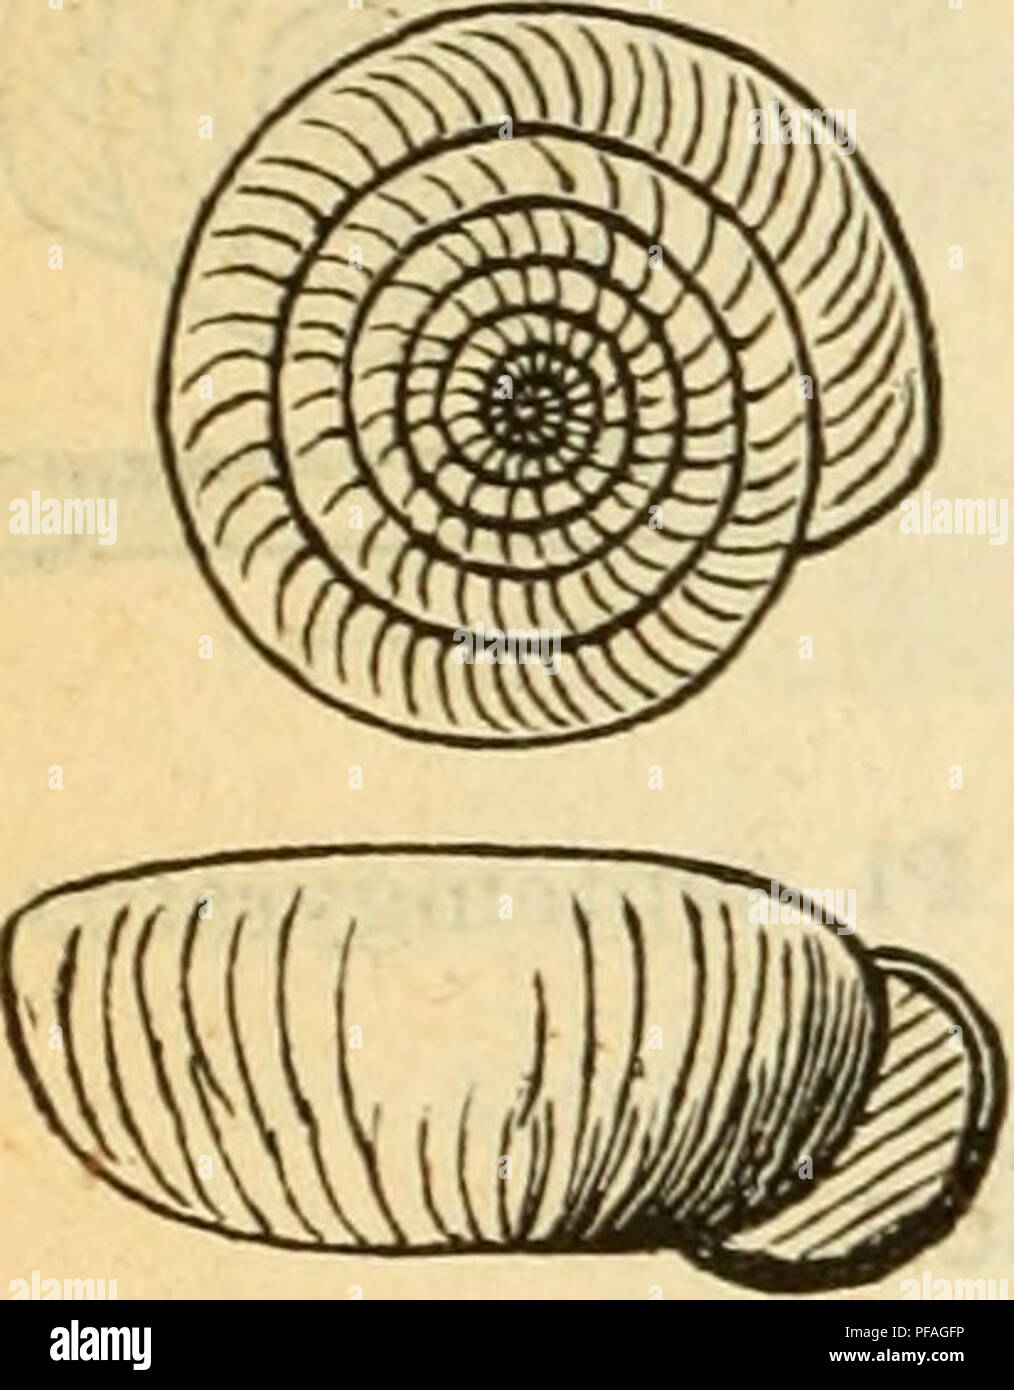 . Deutsche excursions-mollusken-fauna. Mollusks. 410 9. Planorbis contortttSy Linne. Helix contortus, Linne, syst. nat. ed. X. I. p. 770: — Gmelin, syst. nat. I. p. 3624. — — Chemnitz, Conch.-Cab. IX, 2 p. 98 t. 127 fig. 1126. Planorbis — Müller, Verm. bist. ü. p. 162. — C. Pfeiffer, Naturg. I. p. 81 t. 4 fig. 11. — — Sturm, Fauna VI. 3 t. 4. — Eossm., Icon. fig. 117. — — Drap., hist. moll. p. 42 t. 1 fig. 39—41. — Stein, Berlin p. 82 t. 2 fig. 25. — — Kobelt; Nassau p. 193 t, 5 fig. 10. — Slavik, Böhmen p. 115 t. 3 fig. 19-20. — — Lehmann, Stettin p. 213 t. 17 fig. 74. Anatomie: Lehmann 1, c. Stock Photo